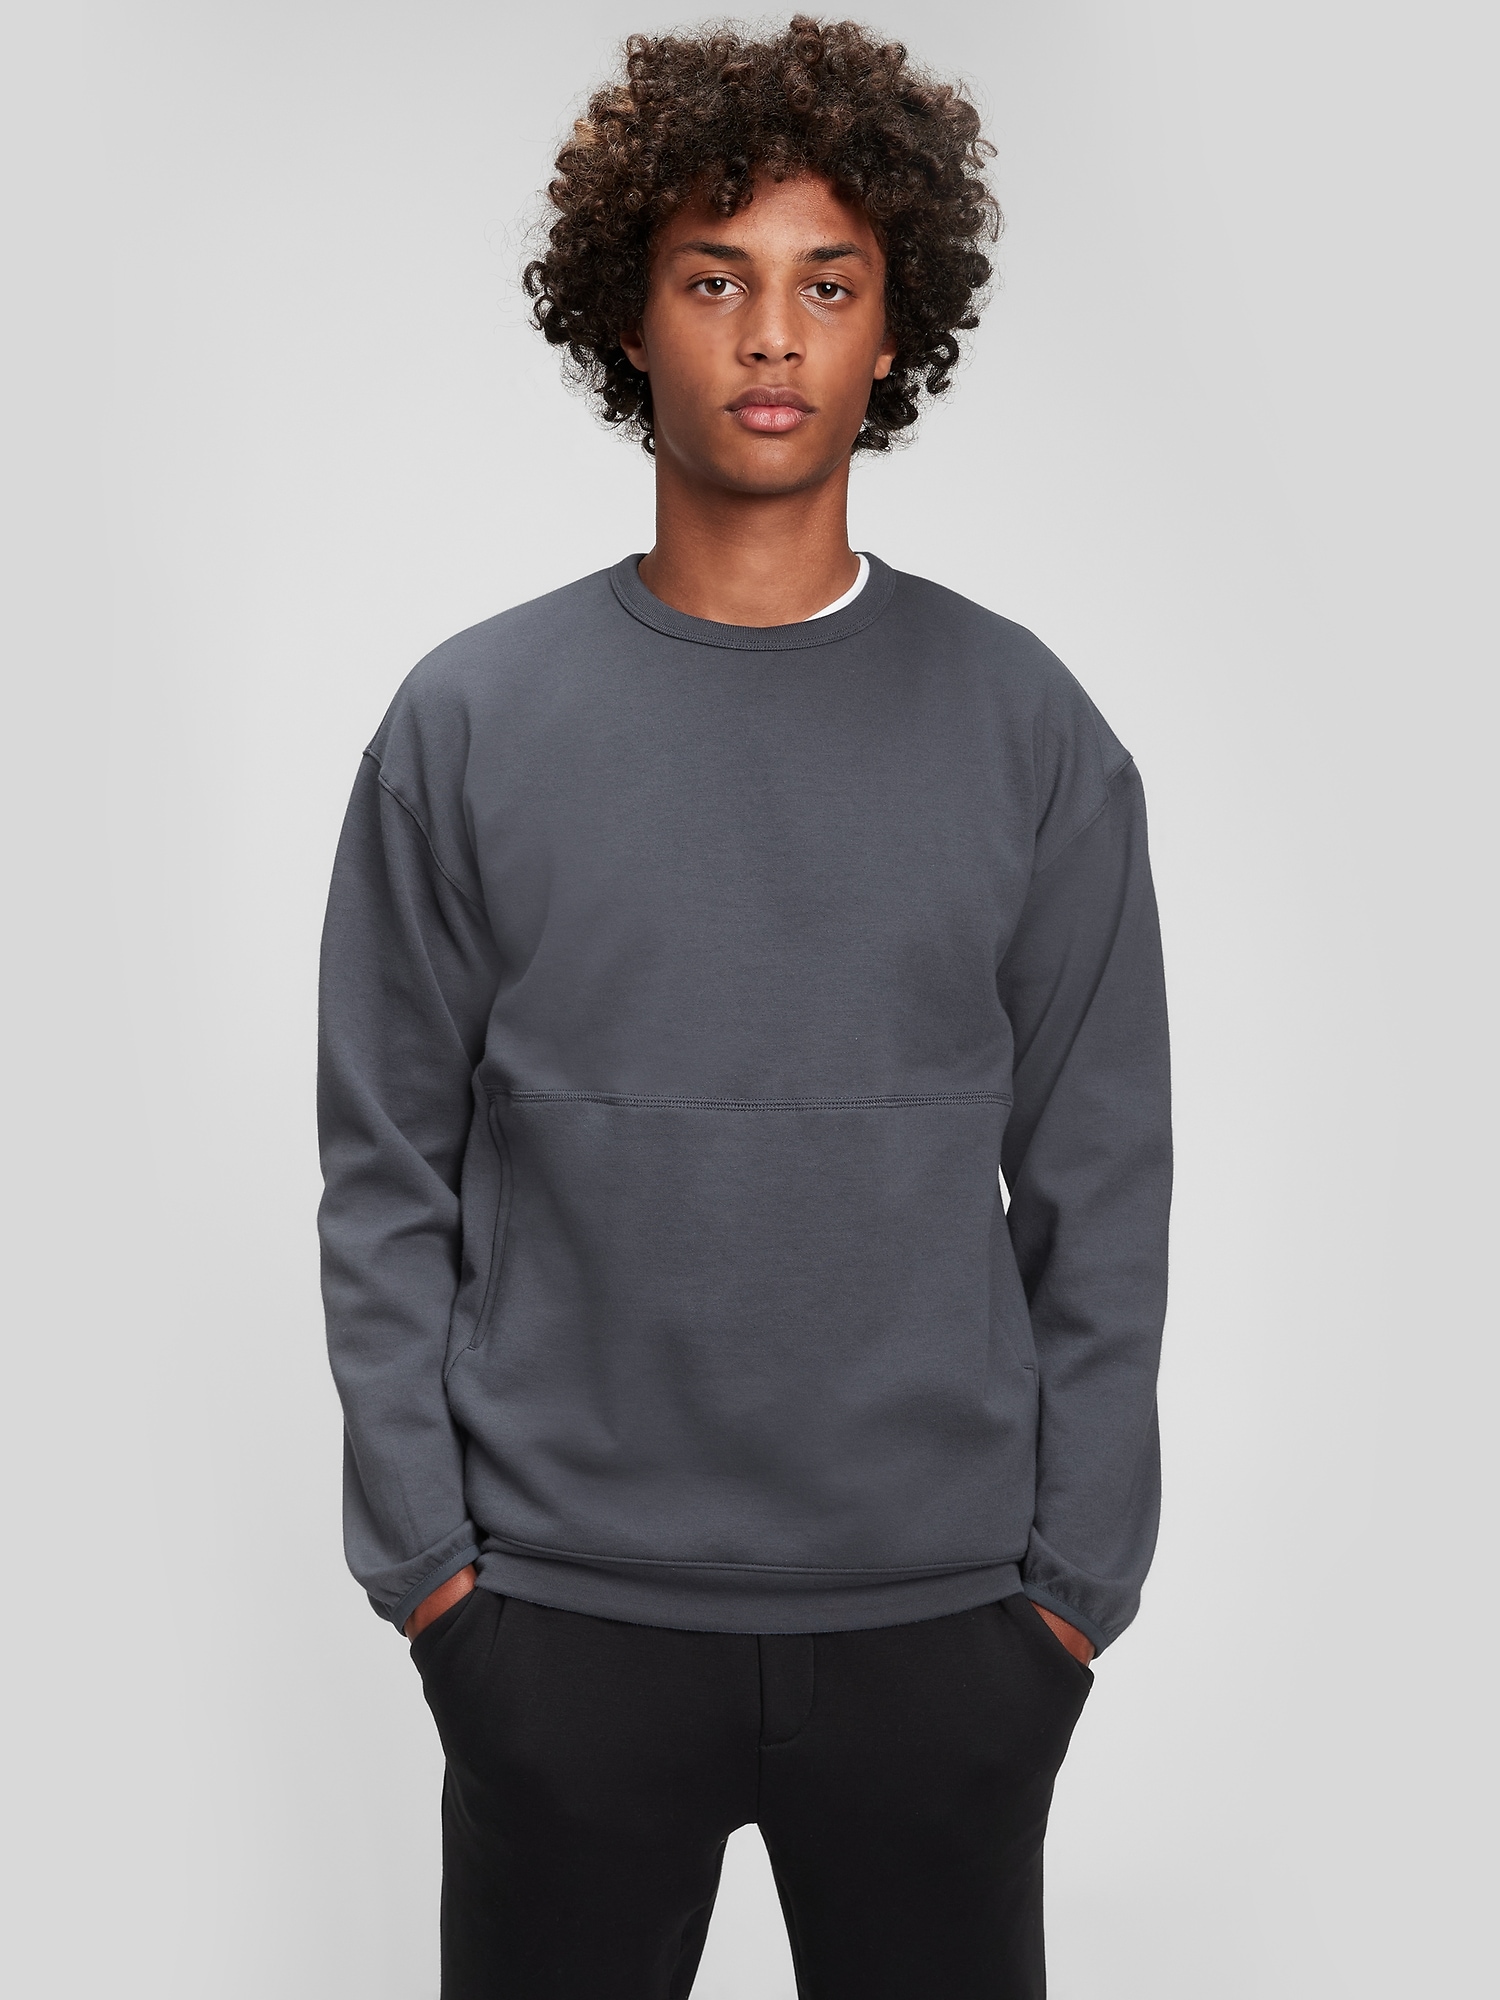 Teen Fit Tech Crewneck Sweatshirt | Gap